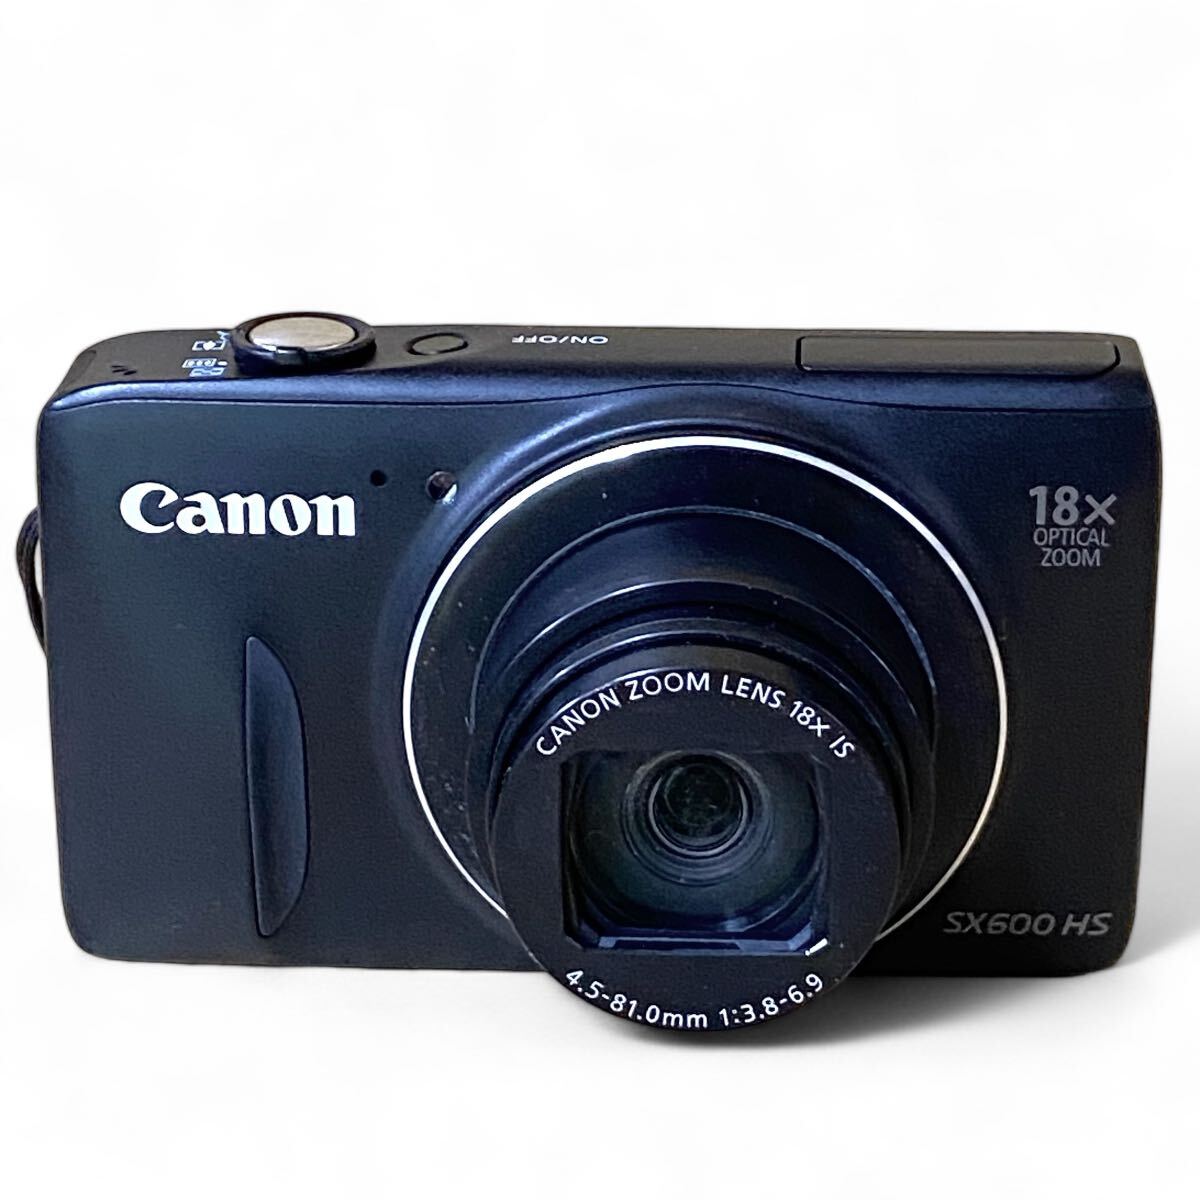 ♪ Canon キャノン PowerShot SX600 HS Wi-Fi/CANON ZOOM LENS 18X IS/4.5-81.0mm 1:3.8-6.9 シャッターOK バッテリー付きの画像2